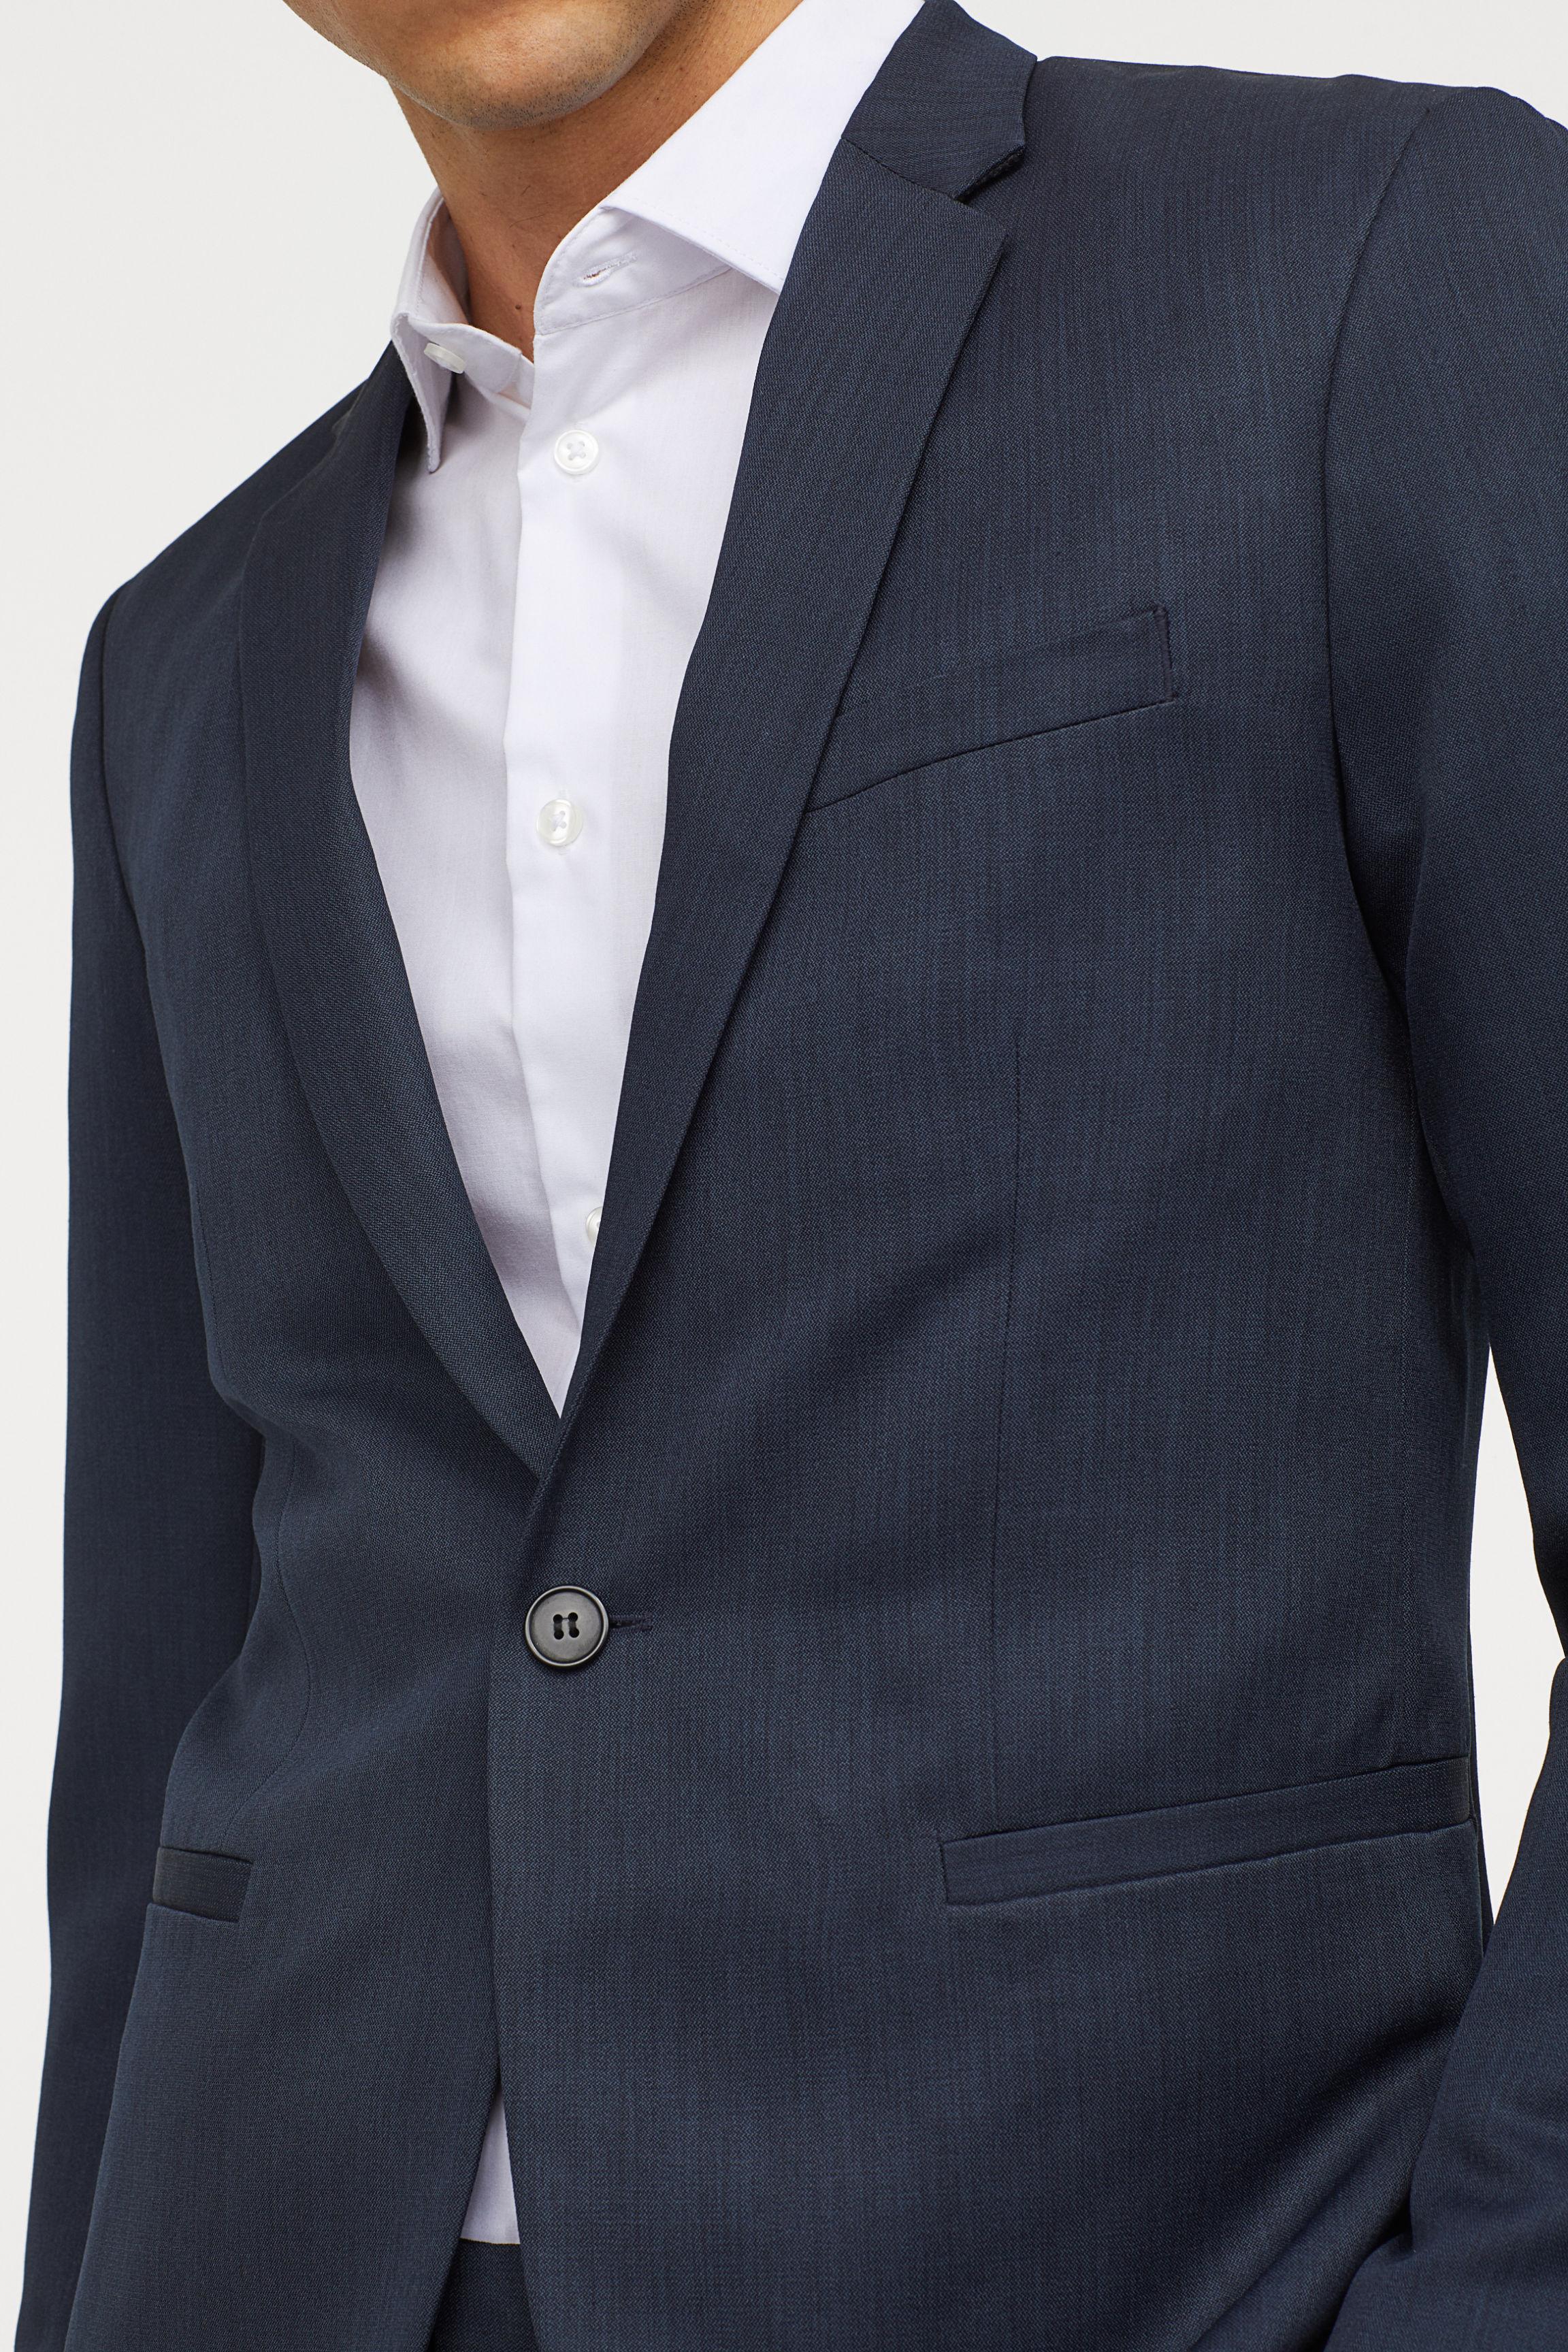 H&M Synthetic Skinny Fit Blazer in Dark Blue Melange (Blue) for Men - Lyst